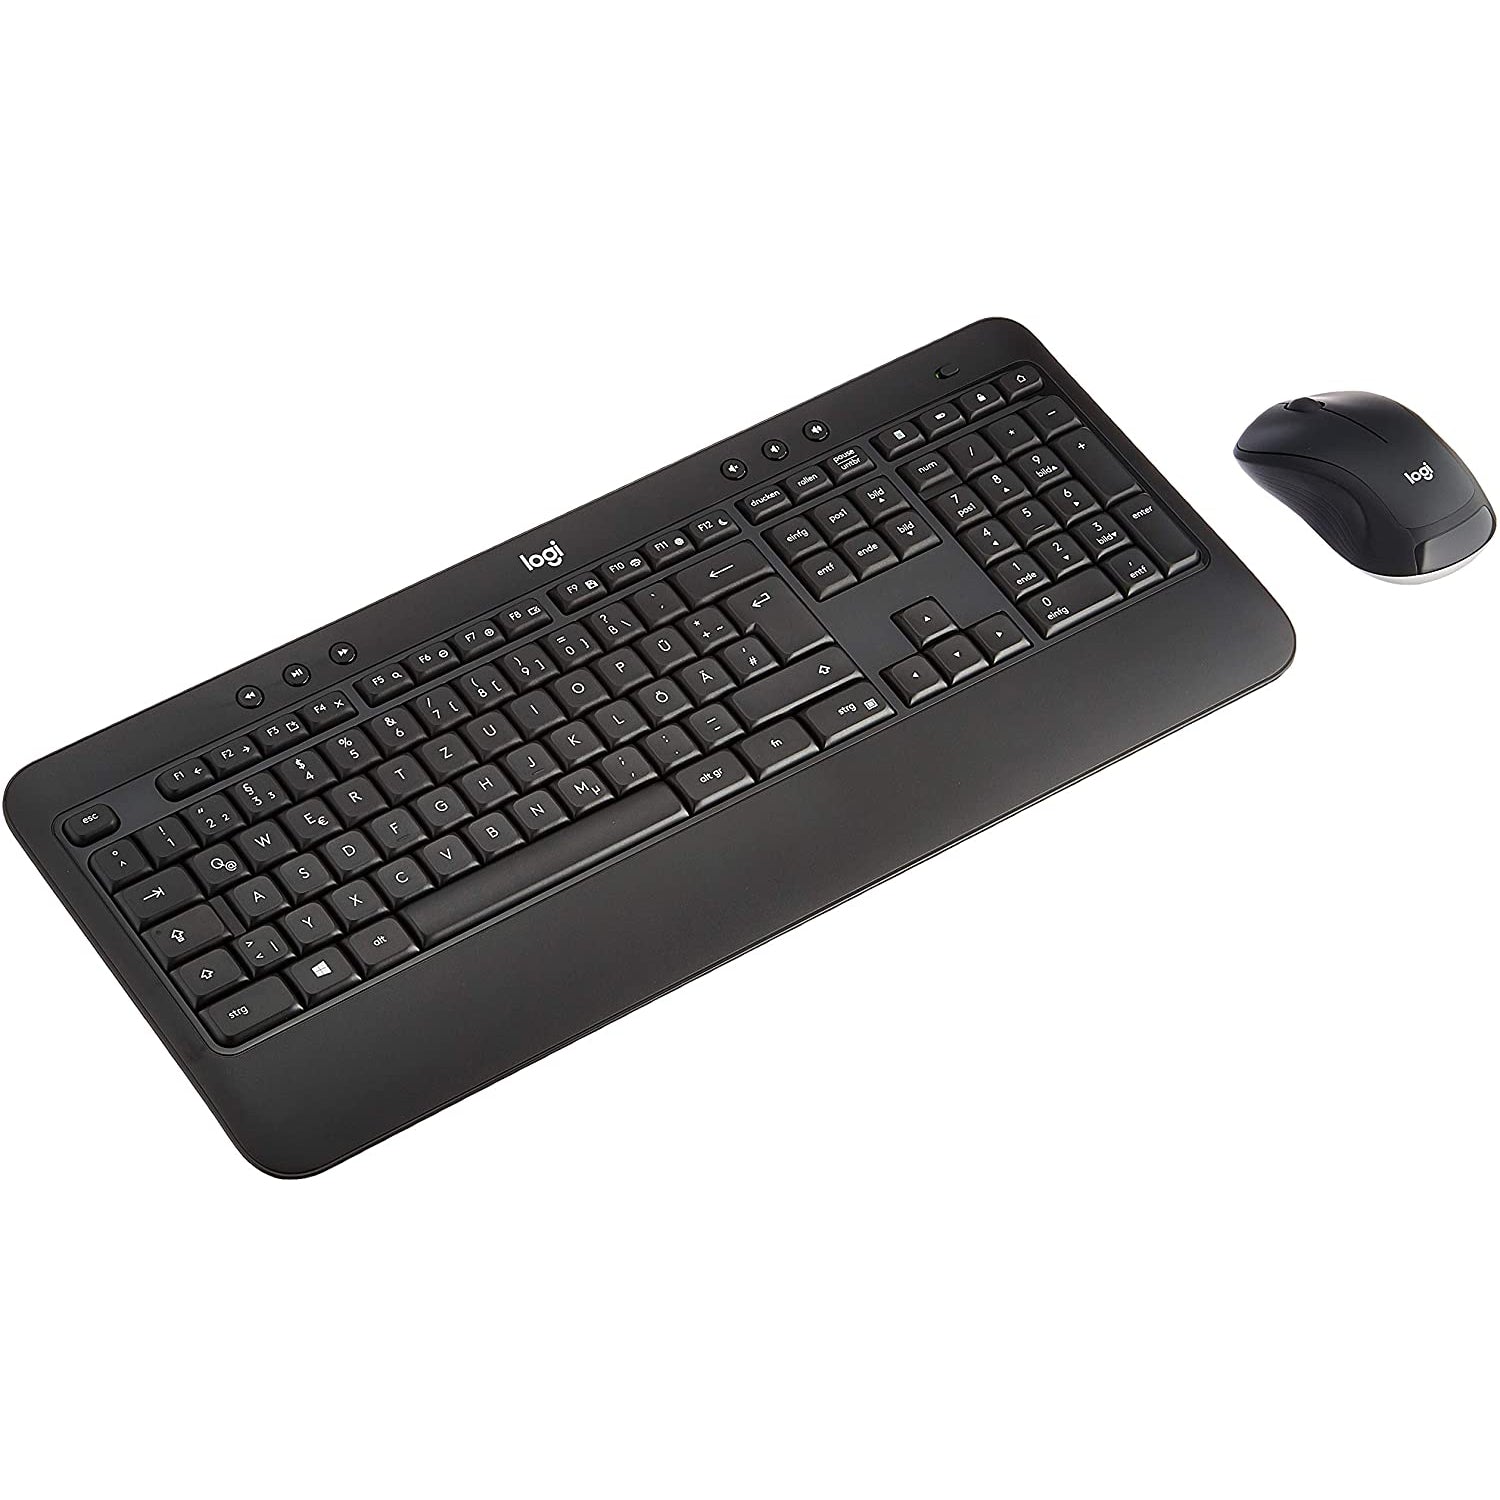 Logitech MK540 Wireless Keyboard and Mouse - Black